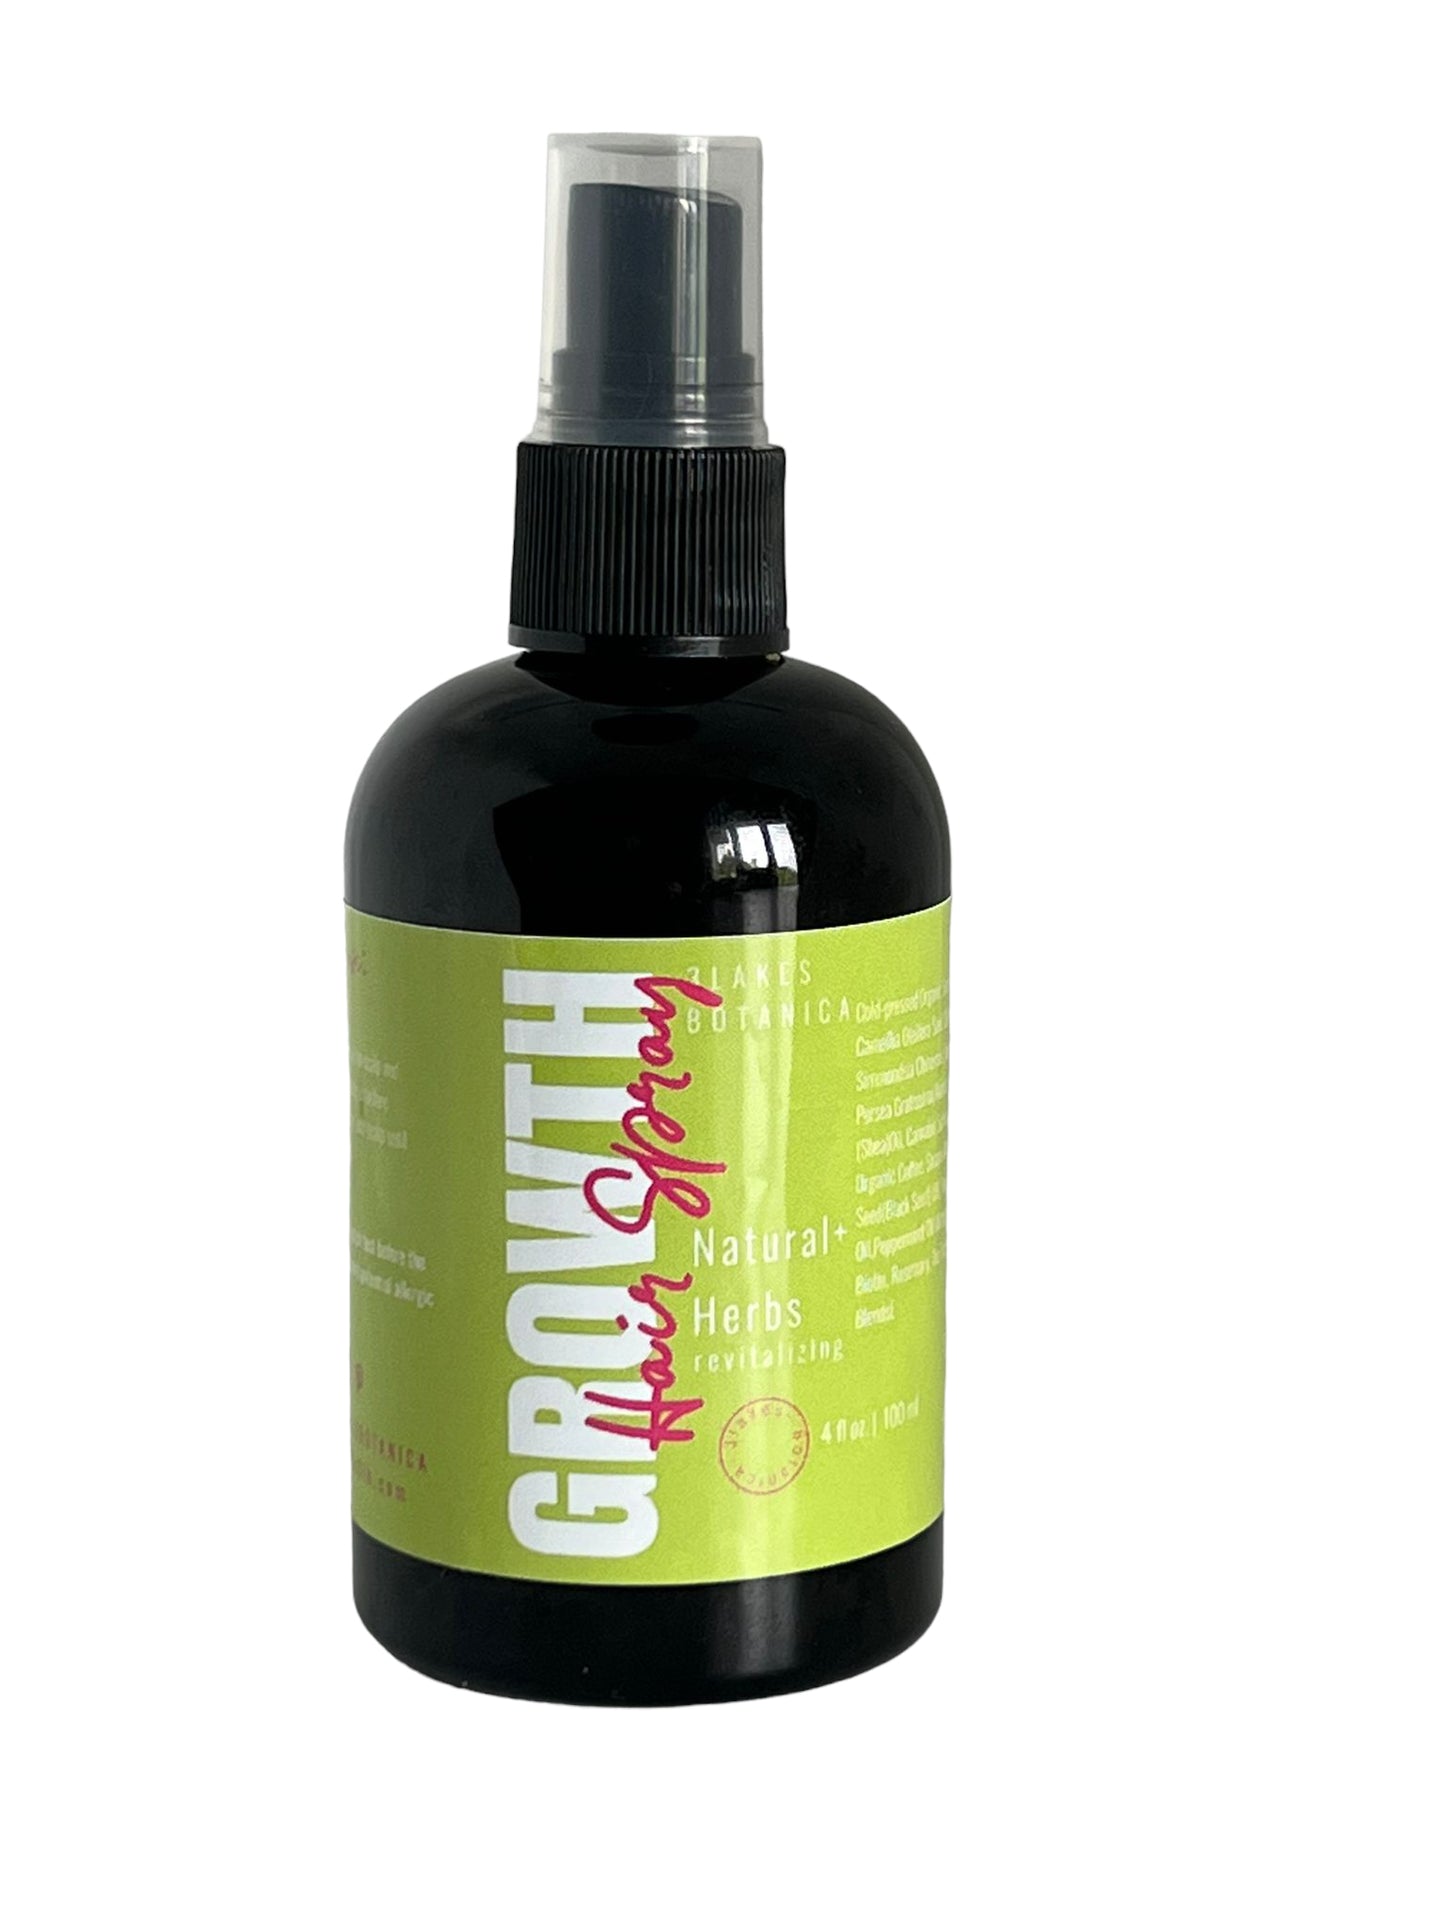 Herbal Hair Spray